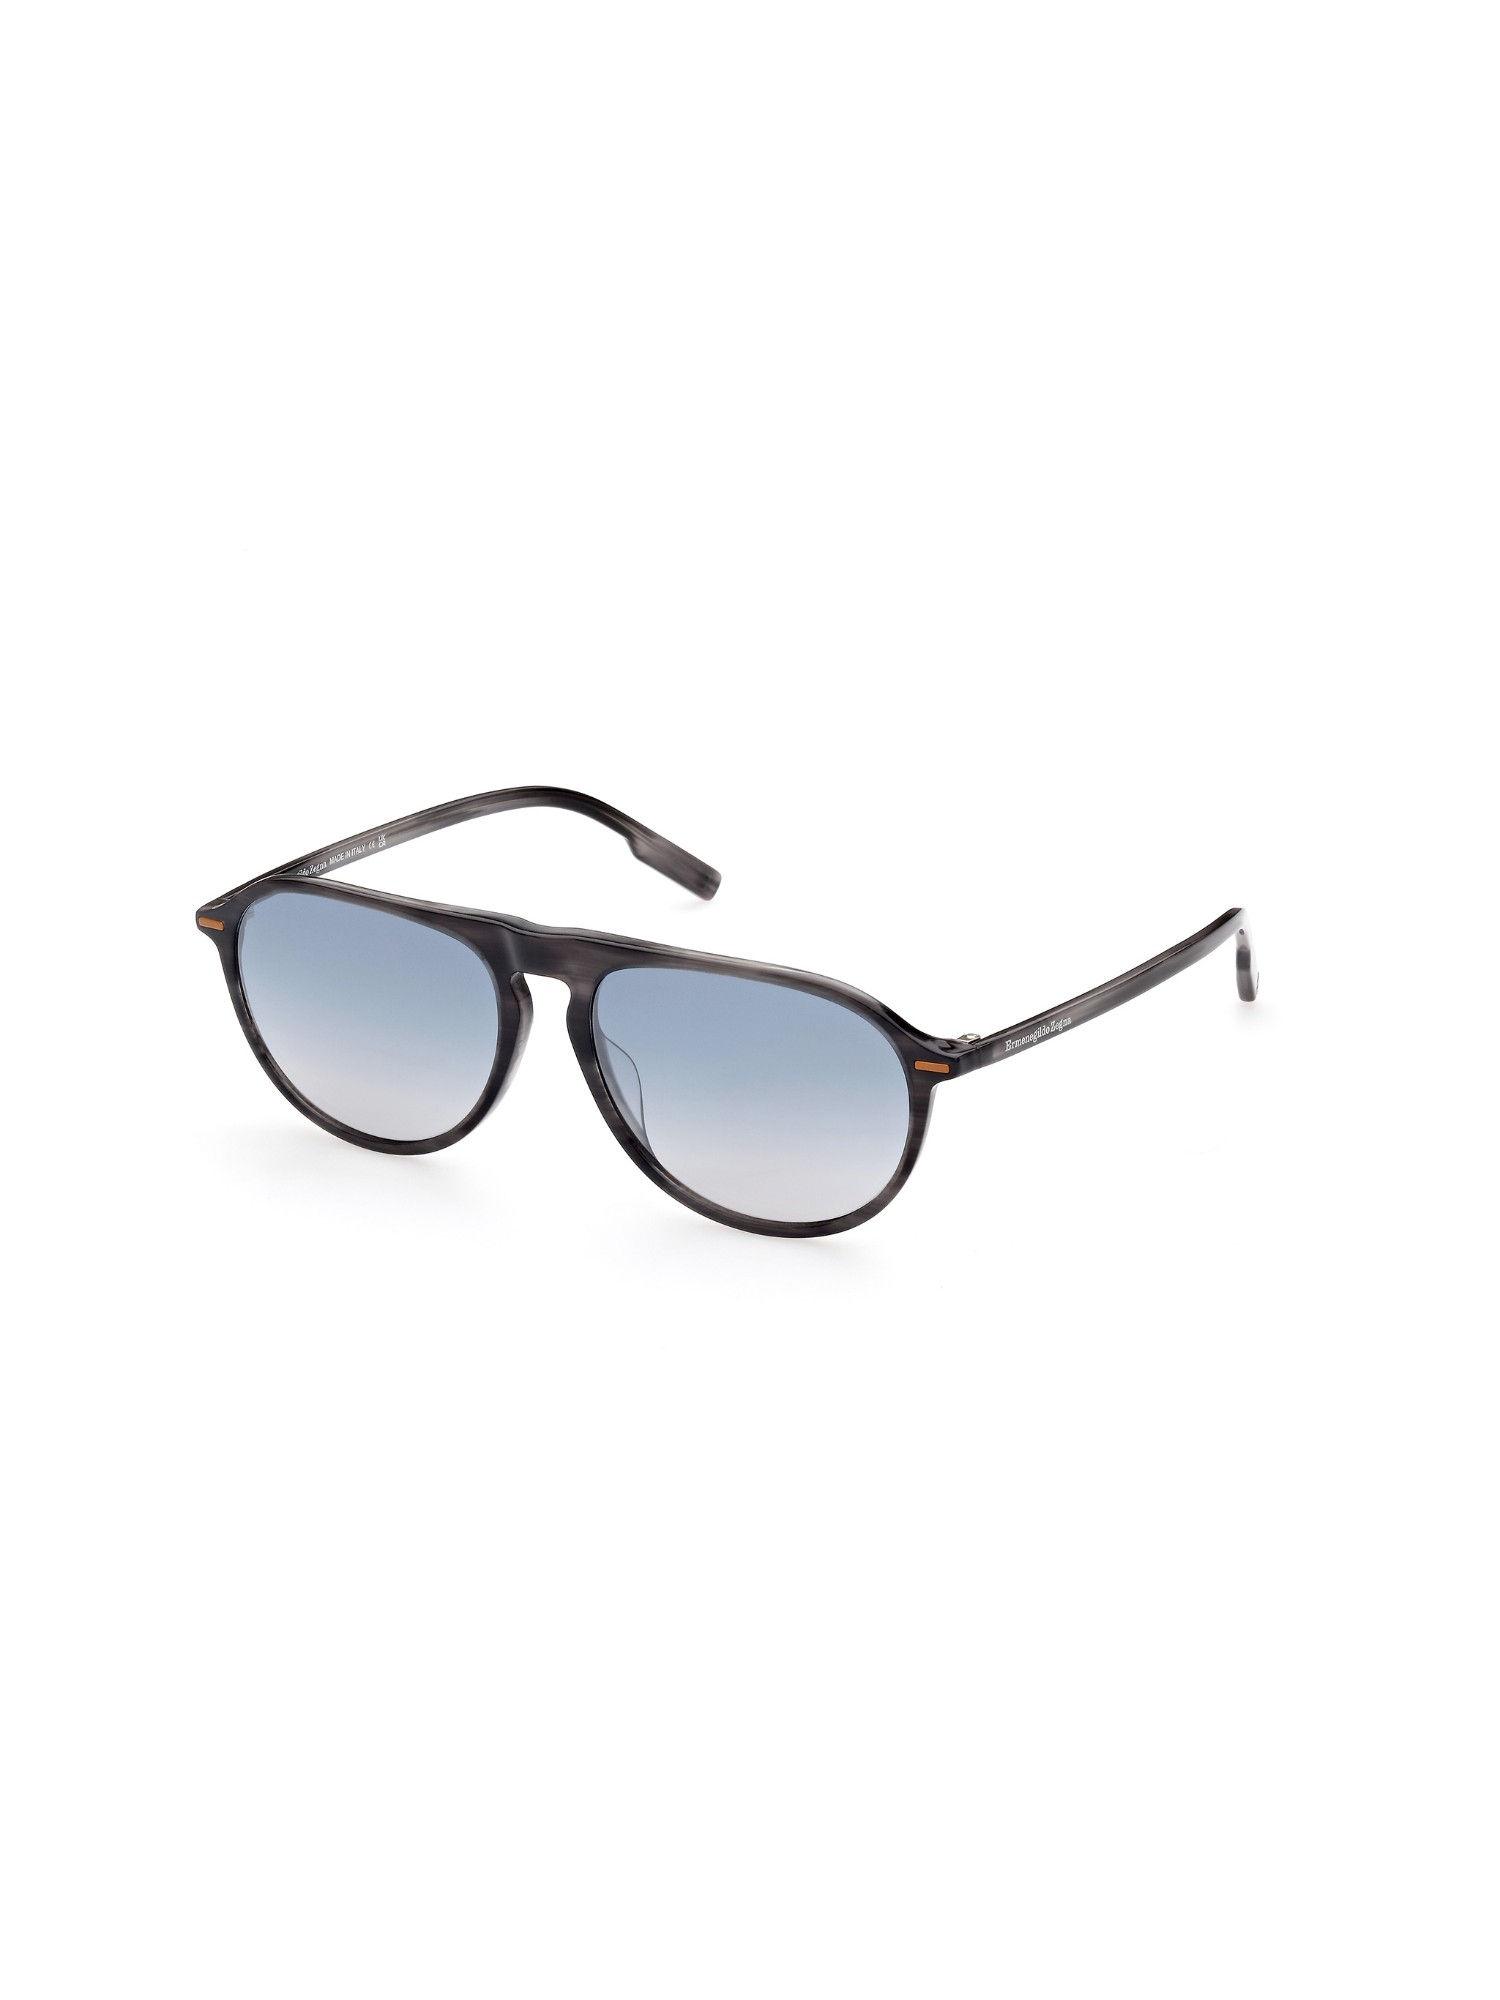 ez0202 uv protected oval sunglasses for men